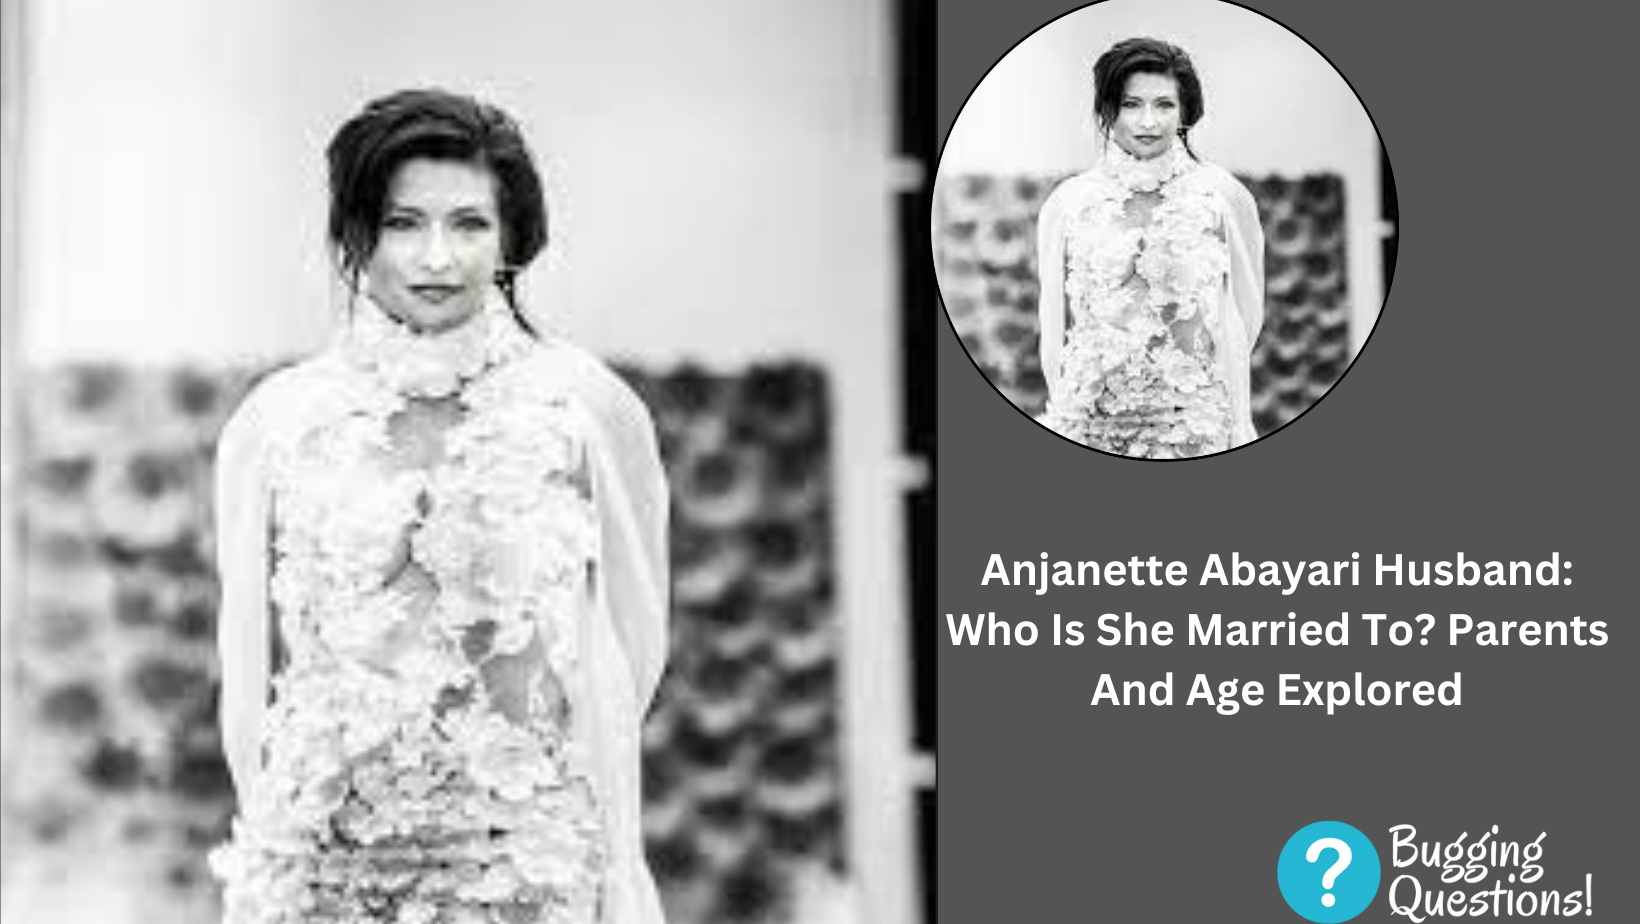 Anjanette Abayari Husband: Who Is She Married To?